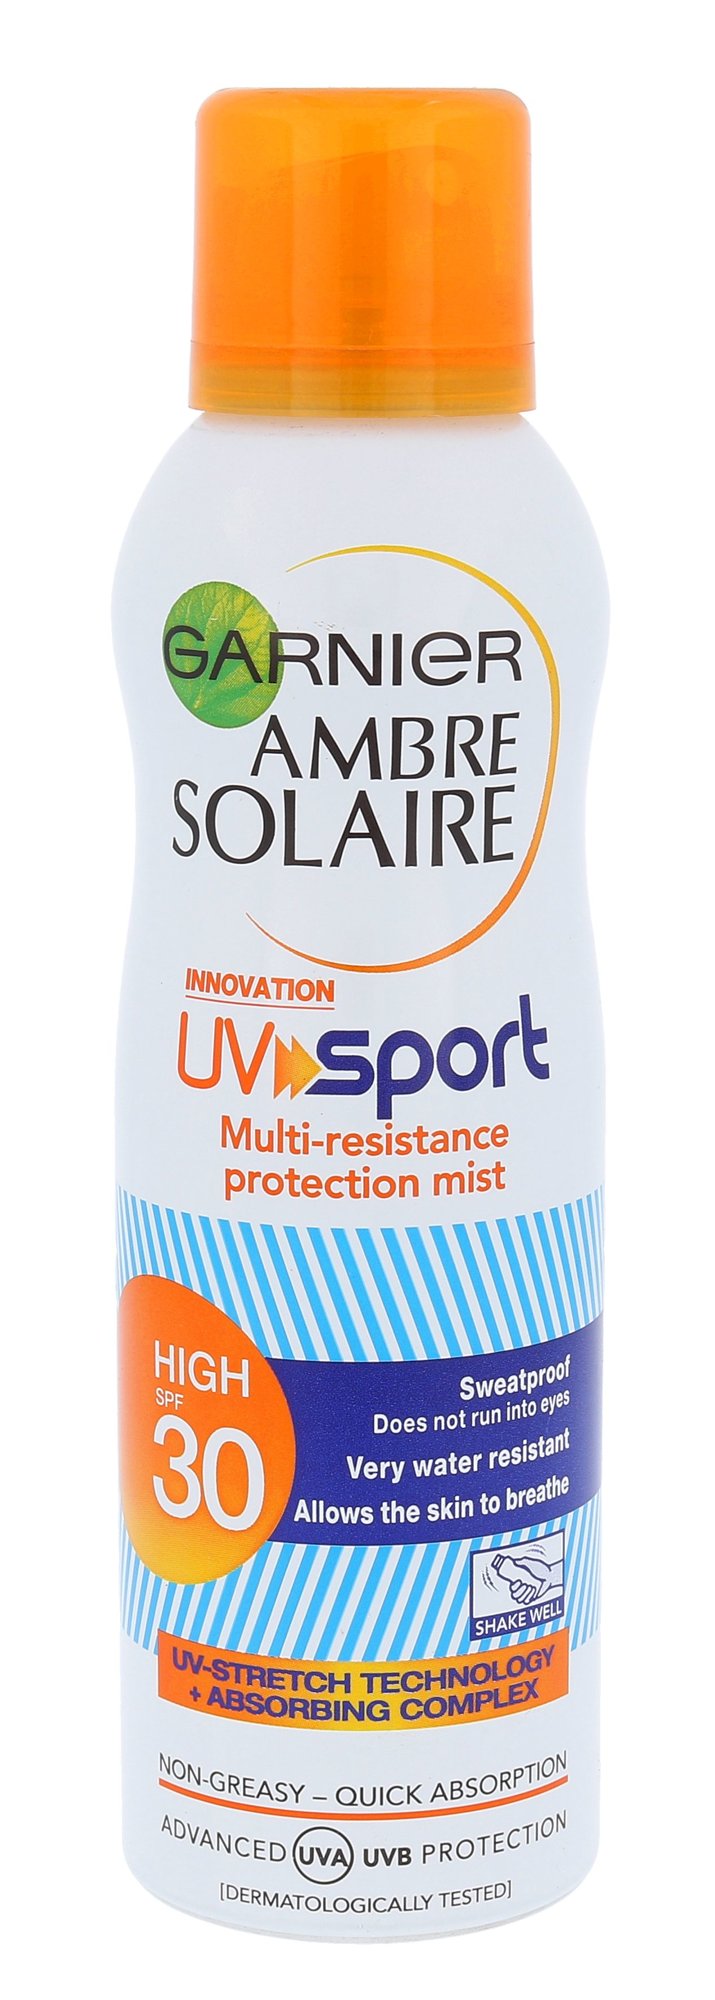 Garnier Ambre Solaire UV Sport Protection Mist SPF30